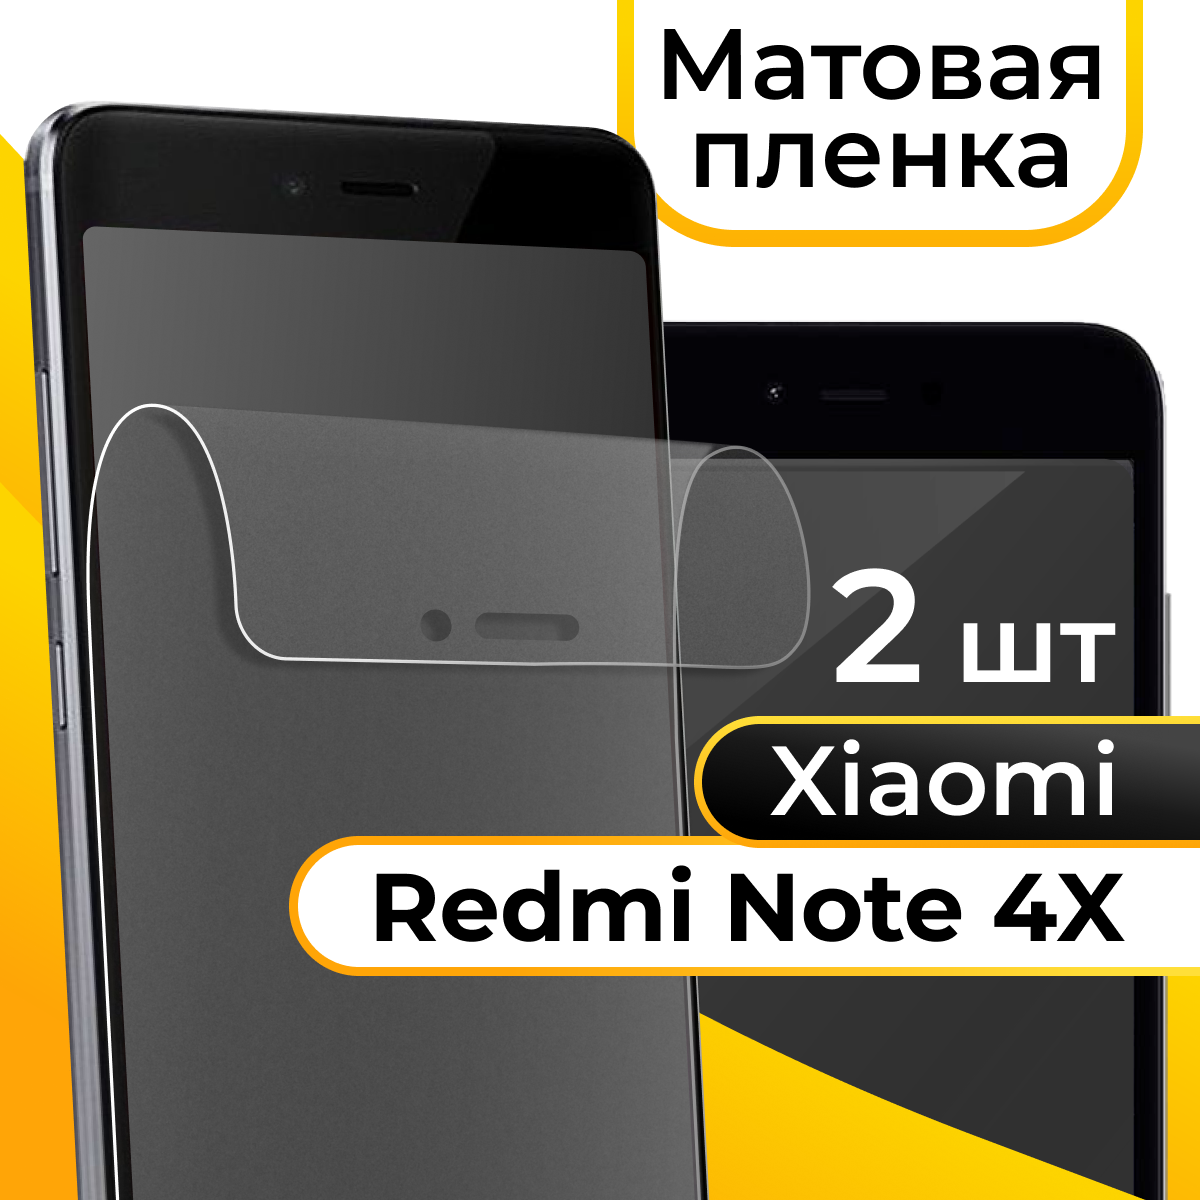 Матовая пленка для смартфона Xiaomi Redmi Note 4X / Защитная противоударная пленка на телефон Сяоми Редми Нот 4Х / Гидрогелевая пленка